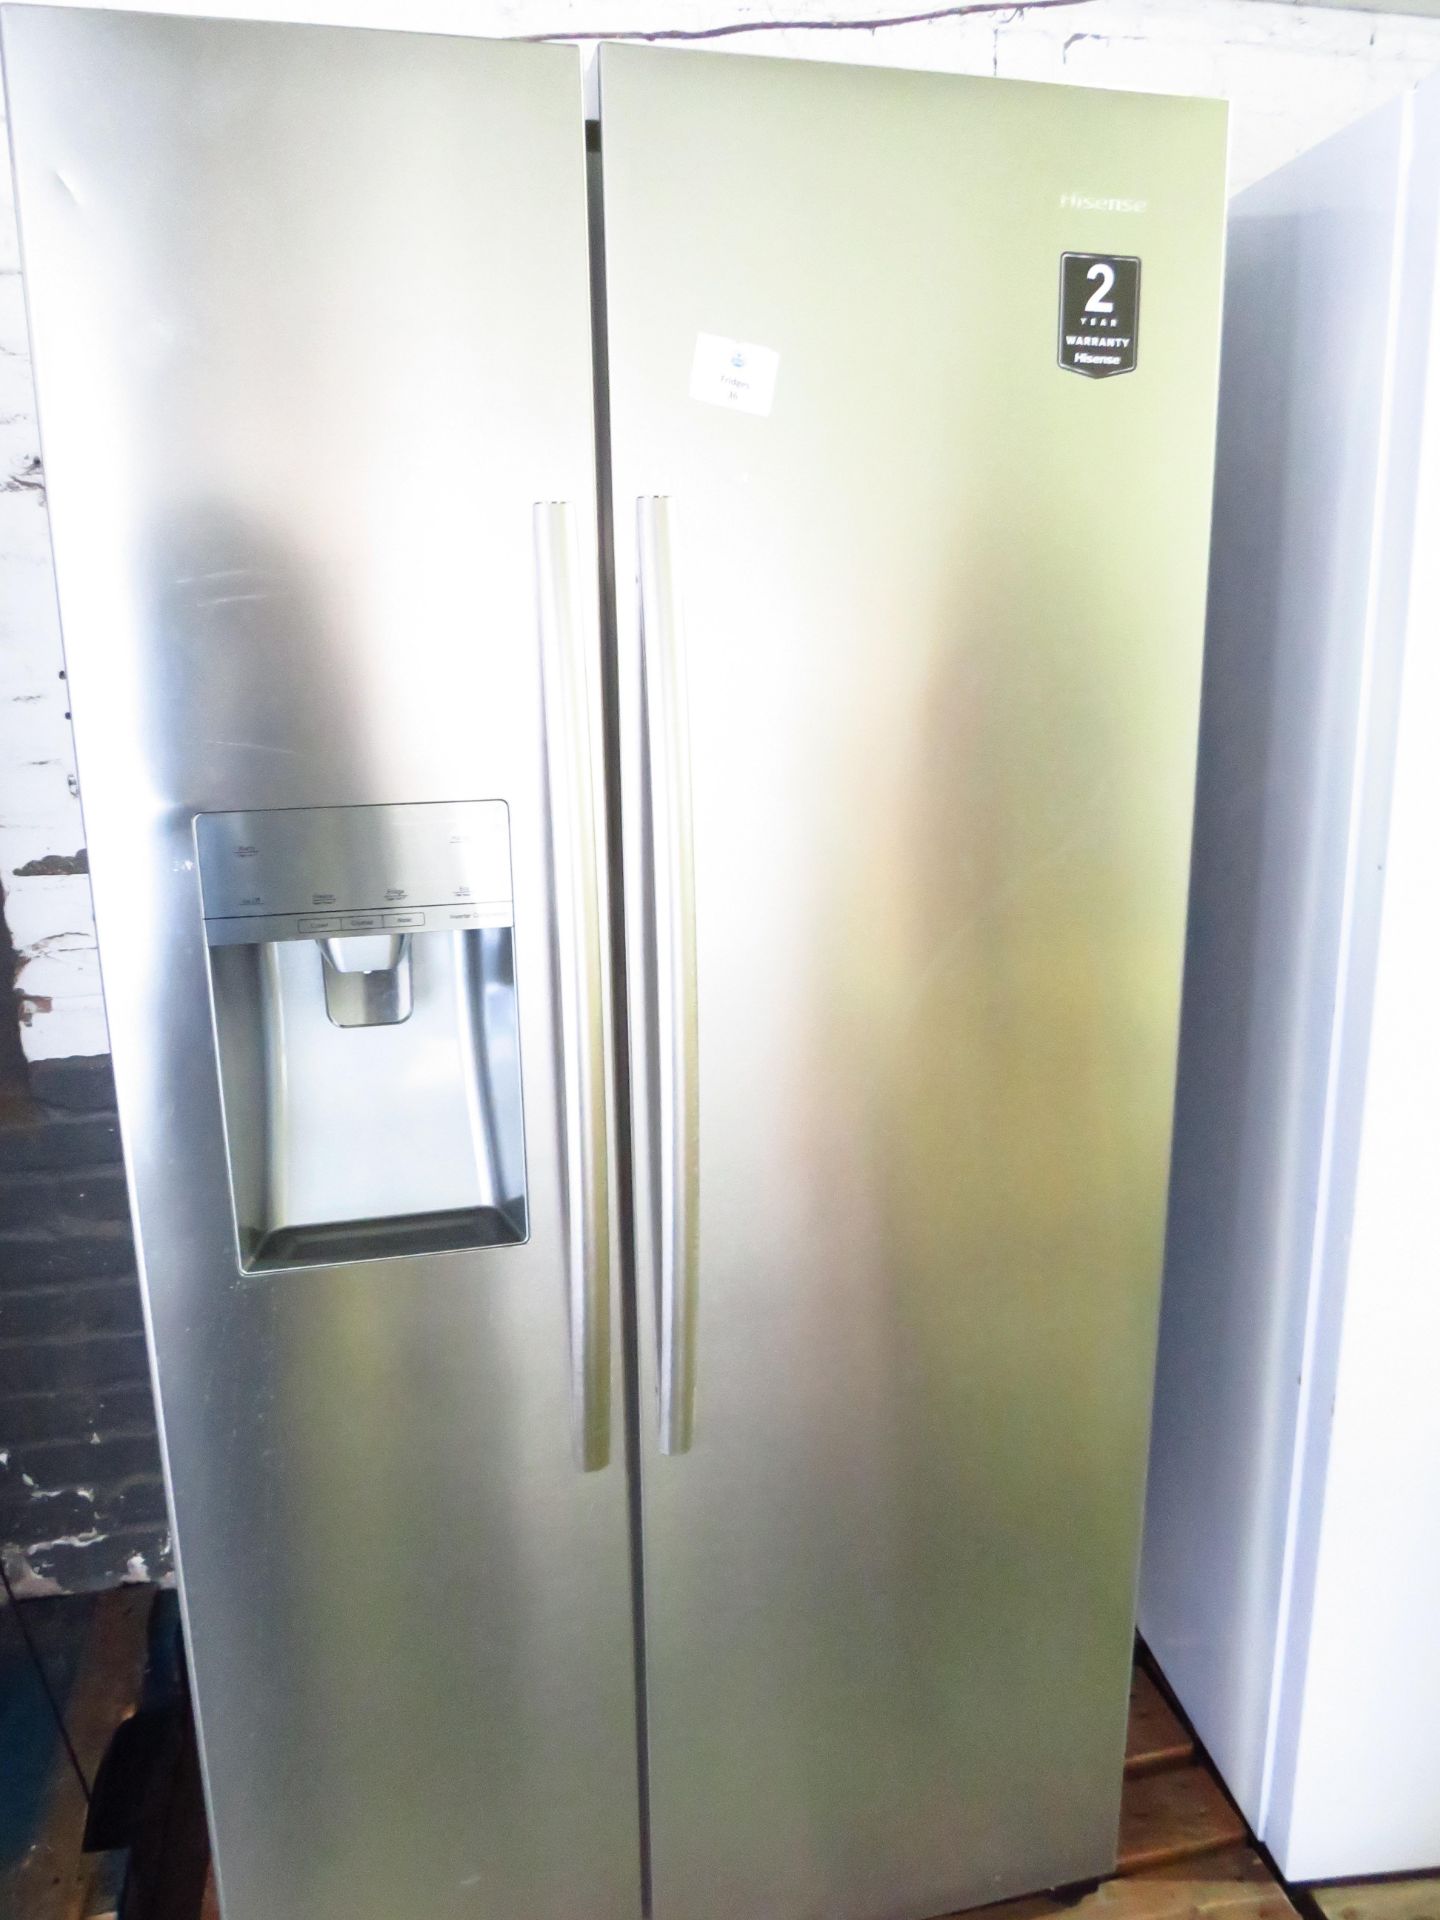 Hisense American fridge freezer with water dispenser, hasÿ 4 dents on fridge door, powers on but